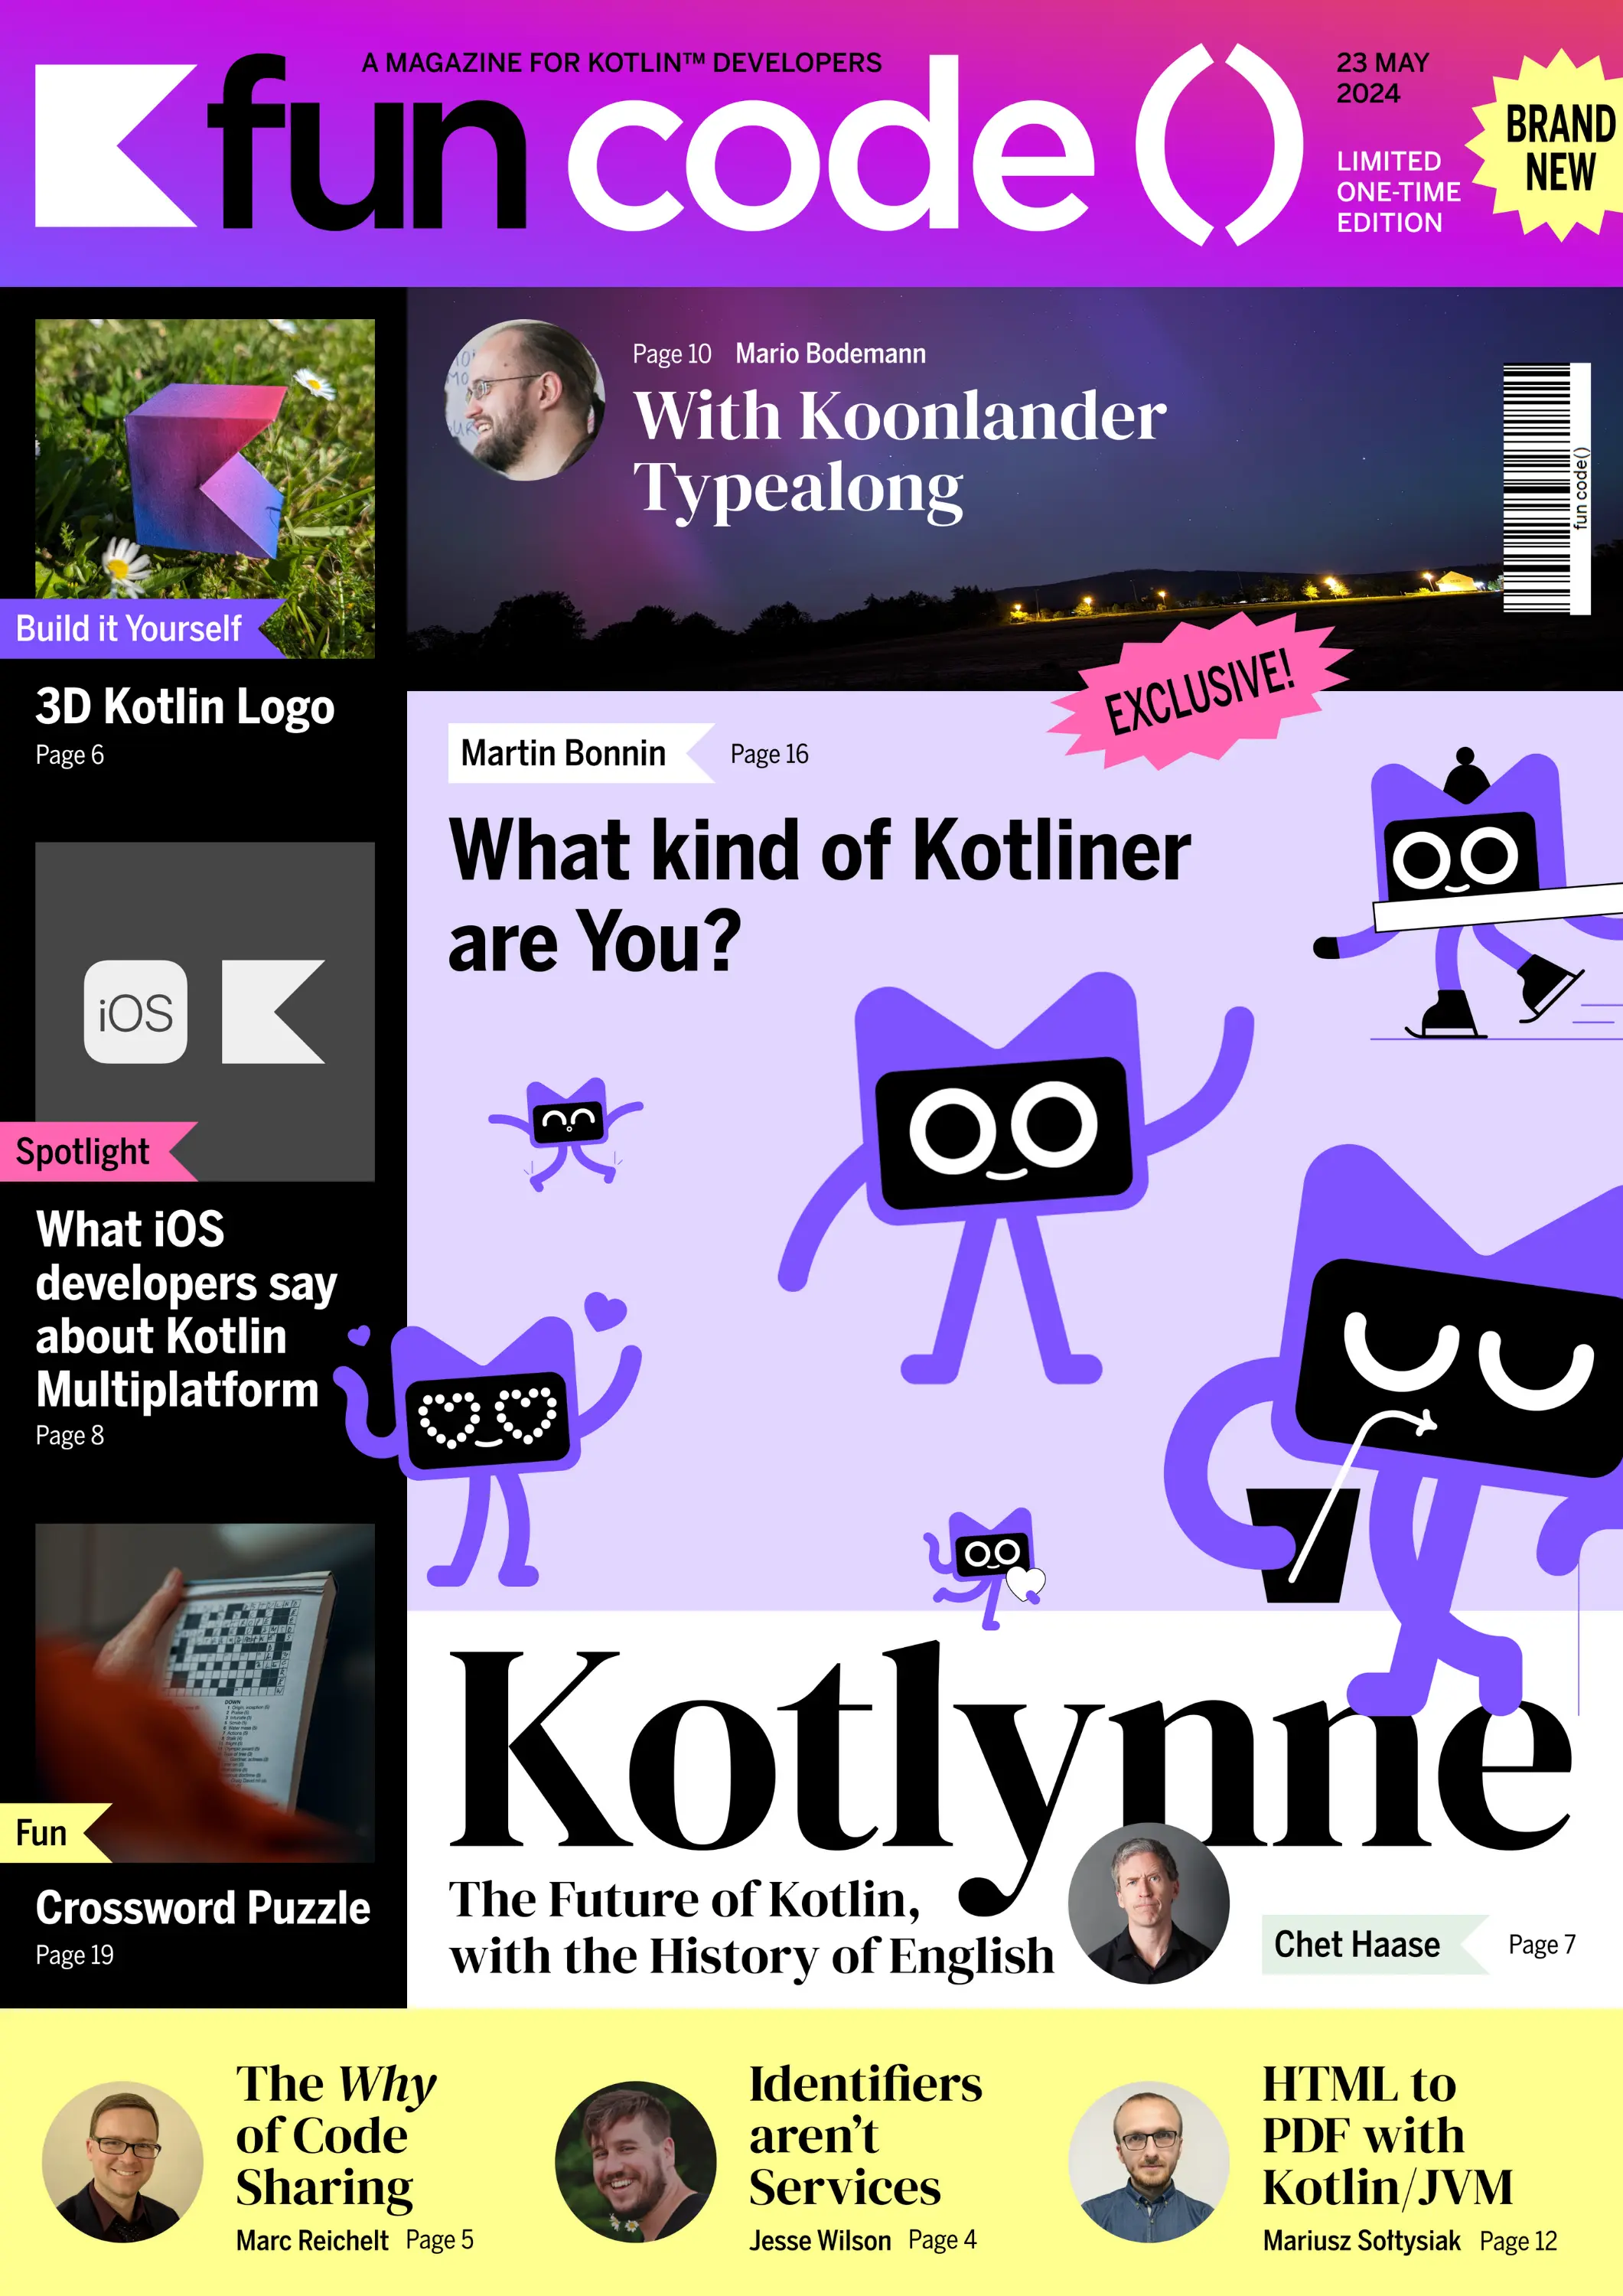 fun code() Magazine - A magazine for Kotlin™ developers